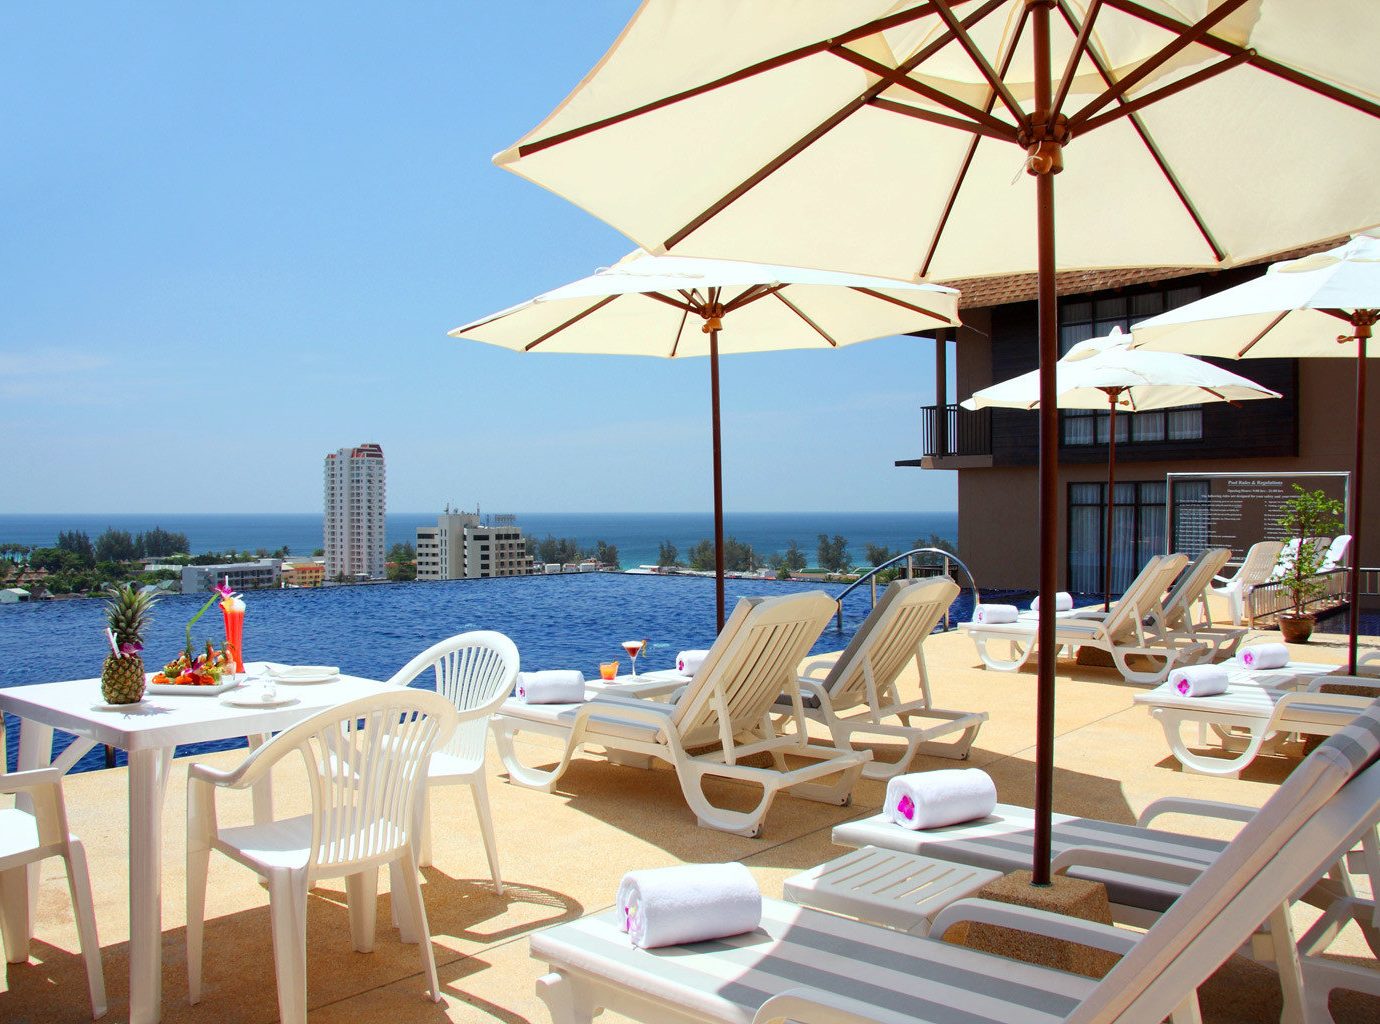 B&B Beachfront Deck Pool Scenic views sky chair restaurant Resort Villa cottage set day